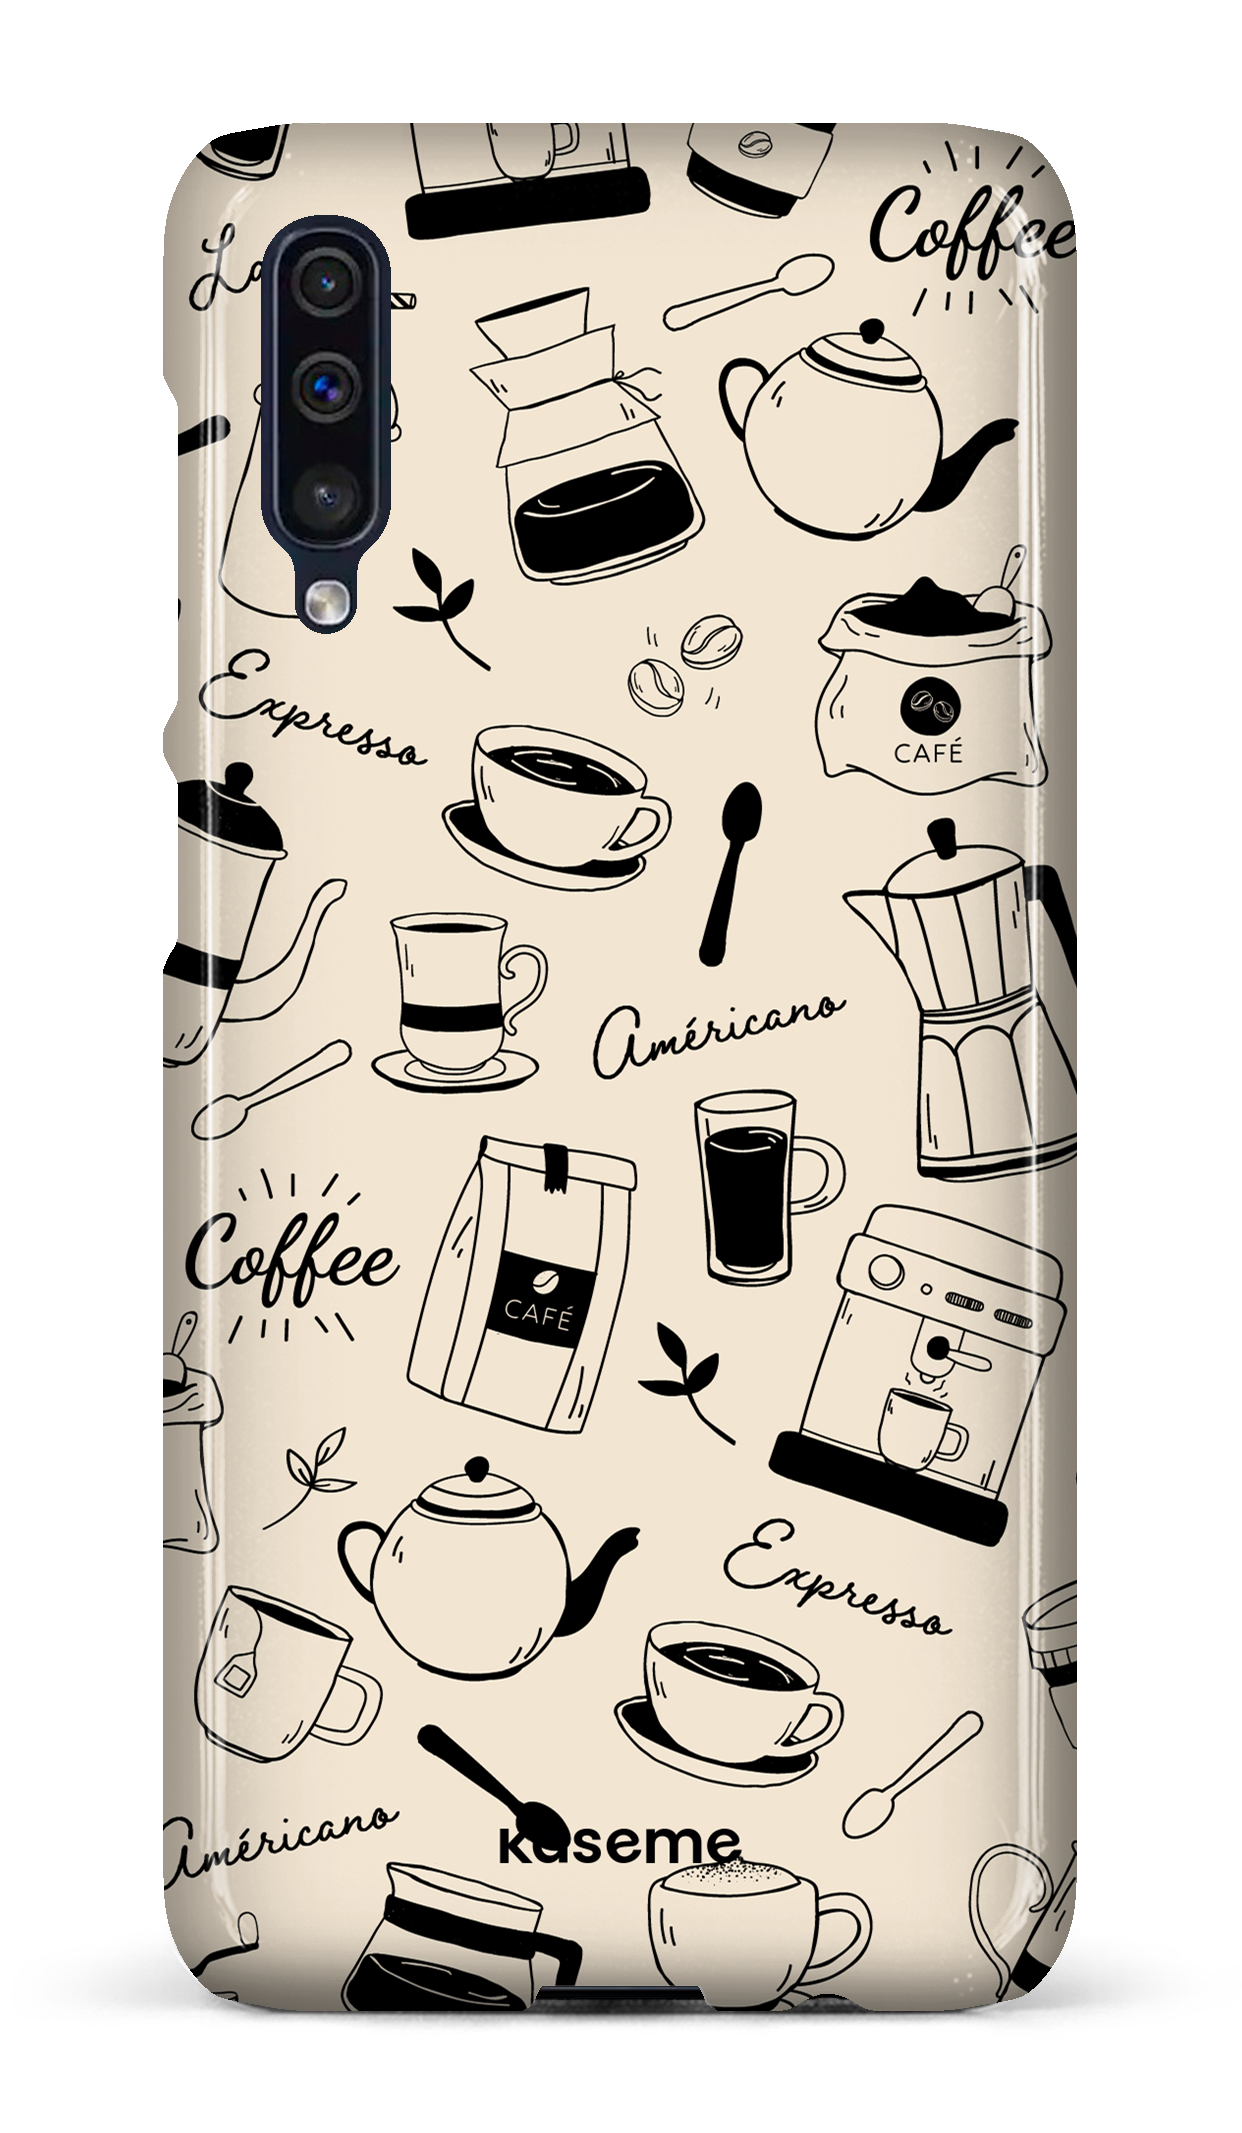 Espresso - Galaxy A50